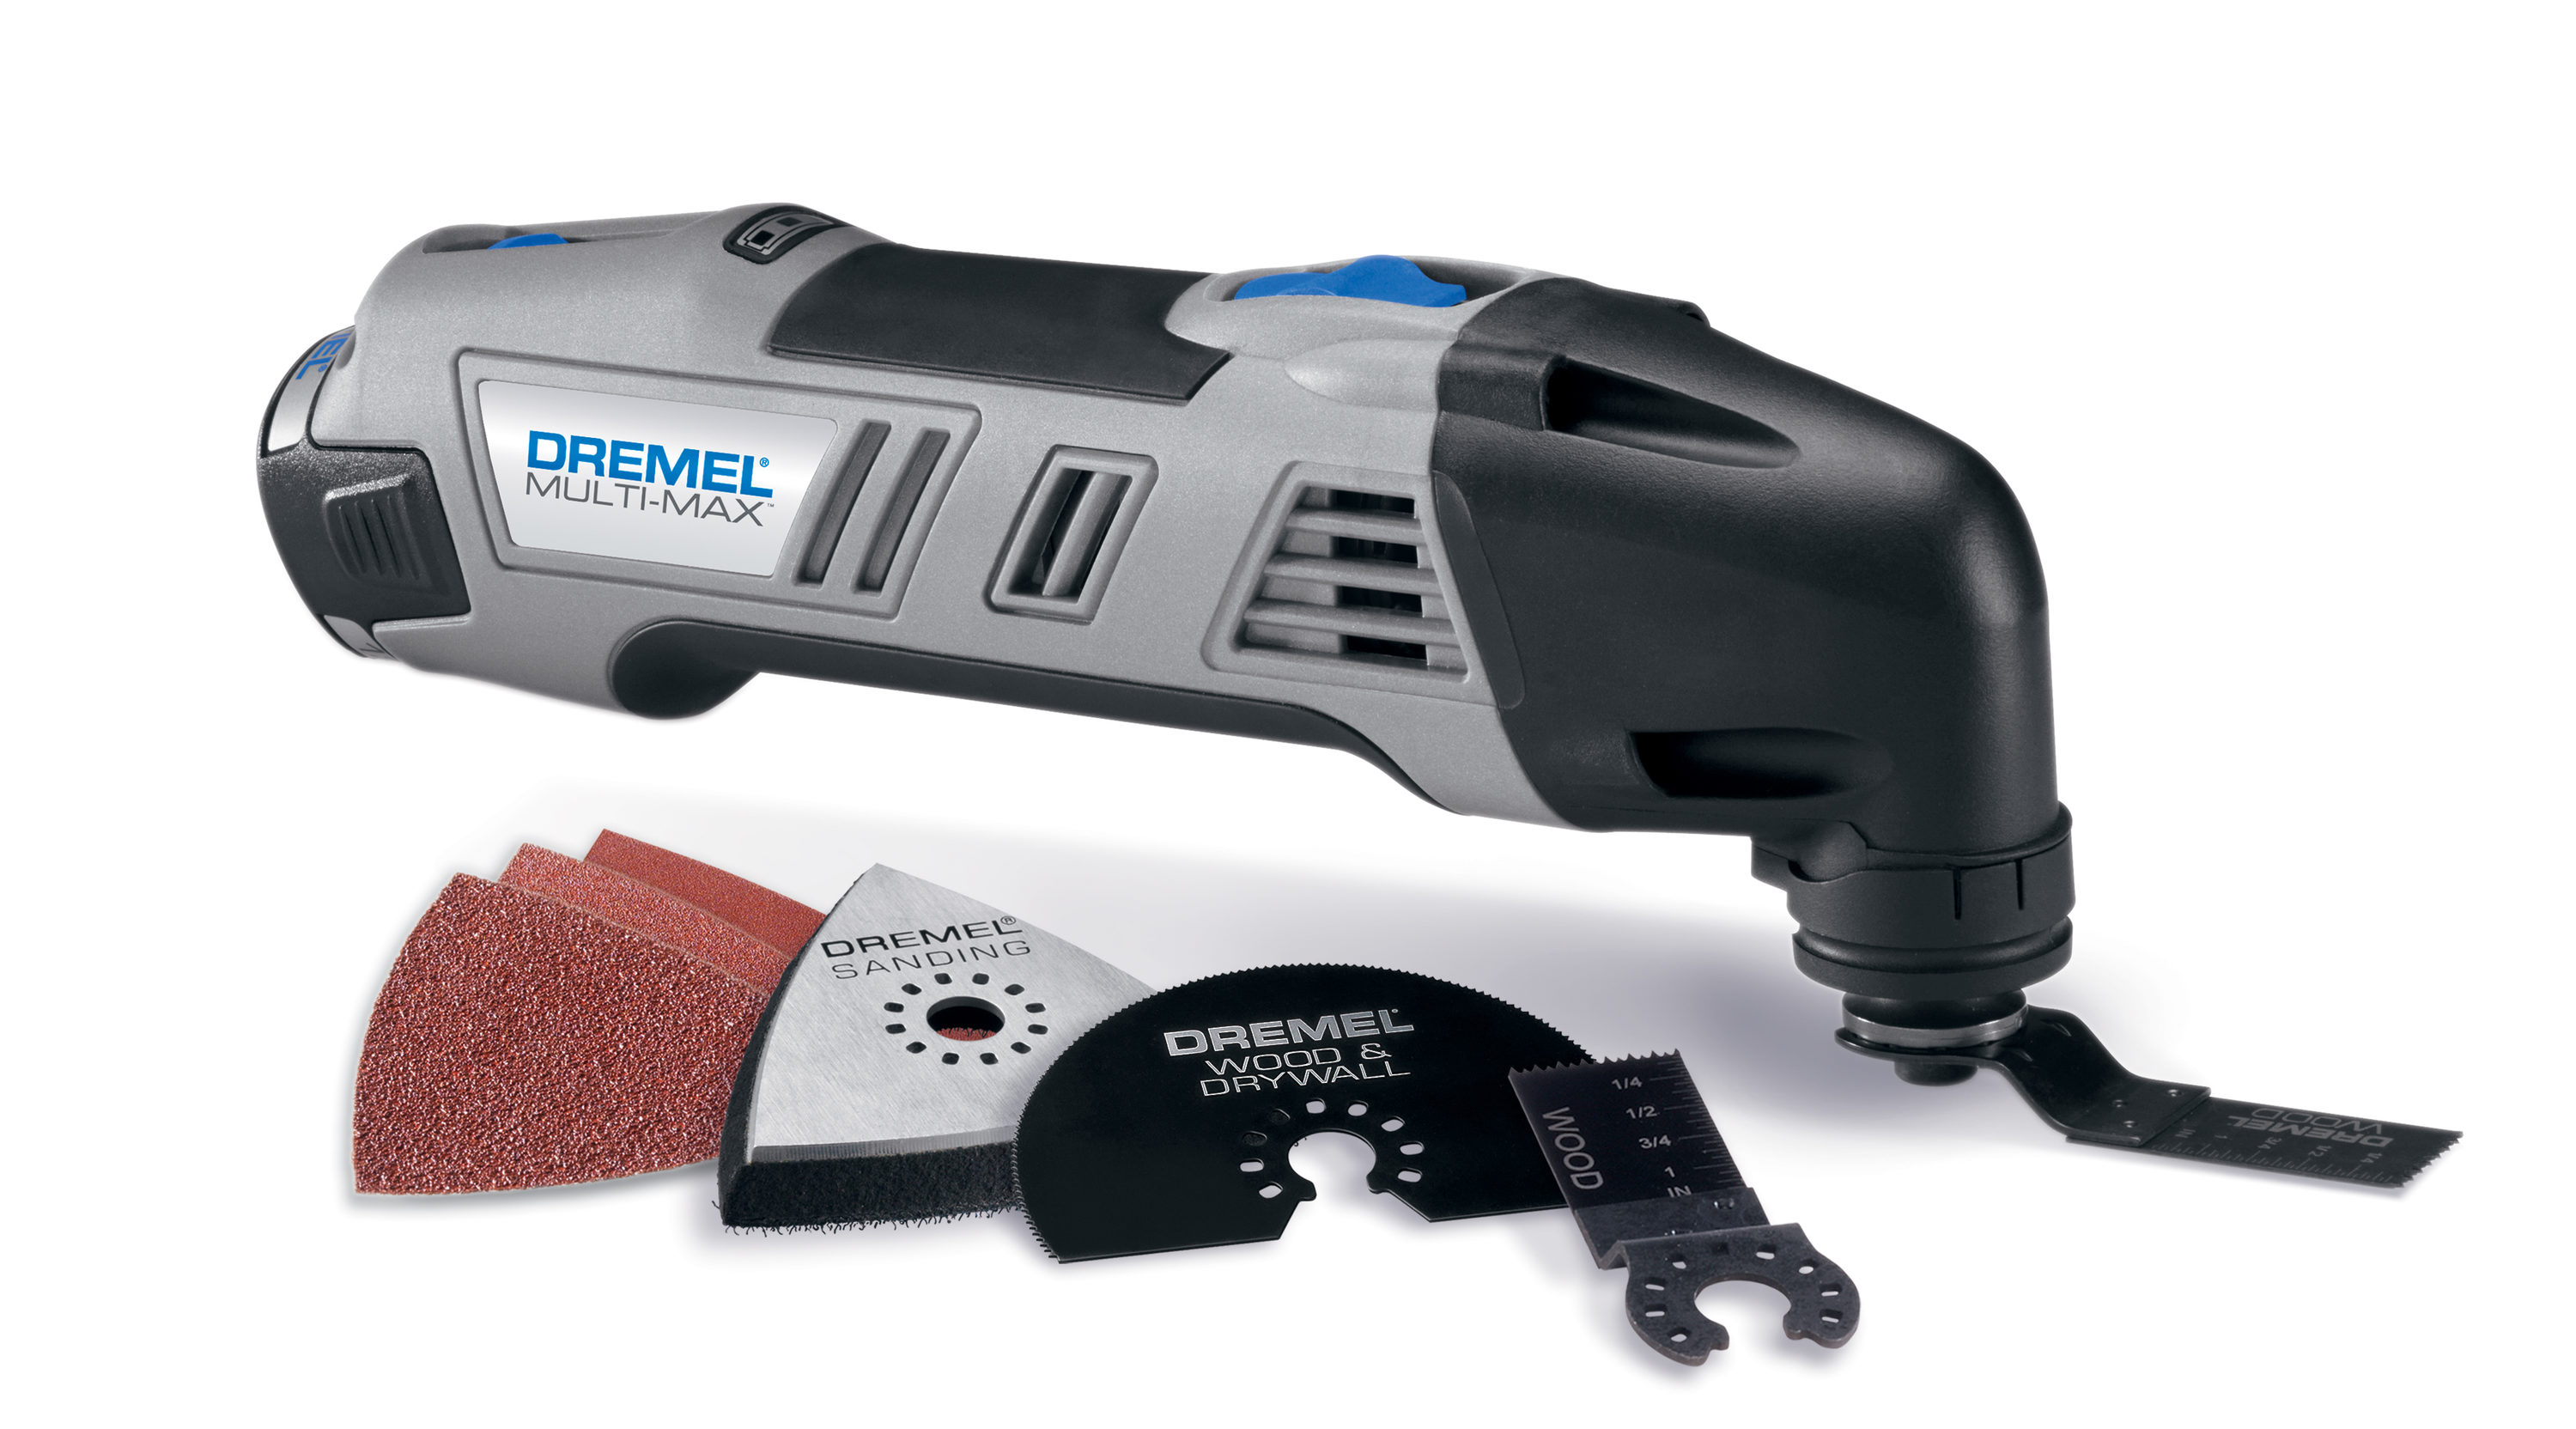 Dremel Multi-Max Cordless Oscillating Tool Kit w/ Batteries, 20V (Dremel  MM20V-02)